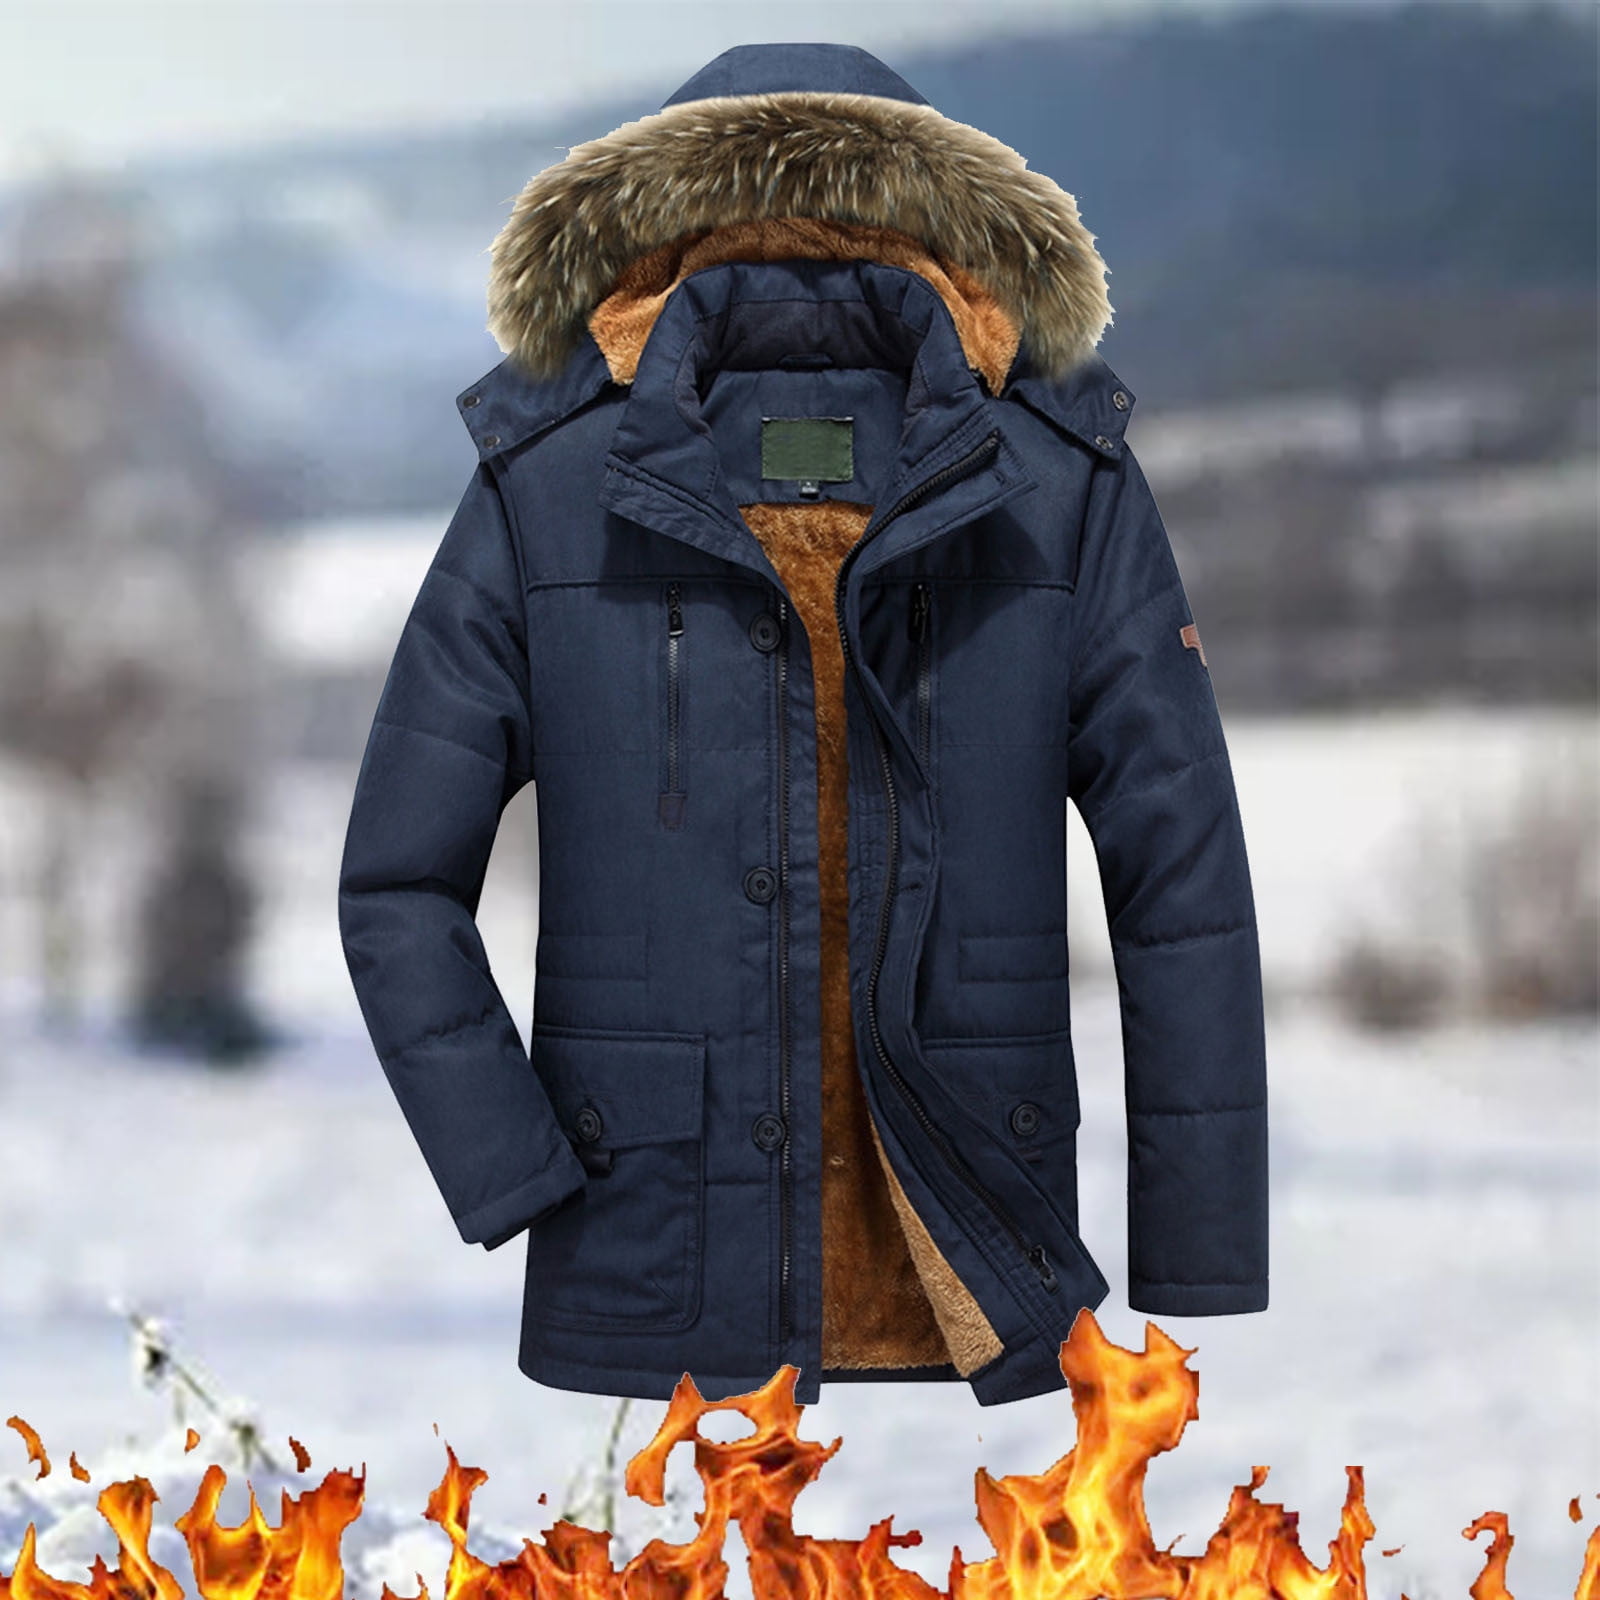 LEEy-world Winter Coat Men's Winter Jacket- Cotton Coat Thicken Casual  Cargo Bomber Jacket Dark Blue,XL